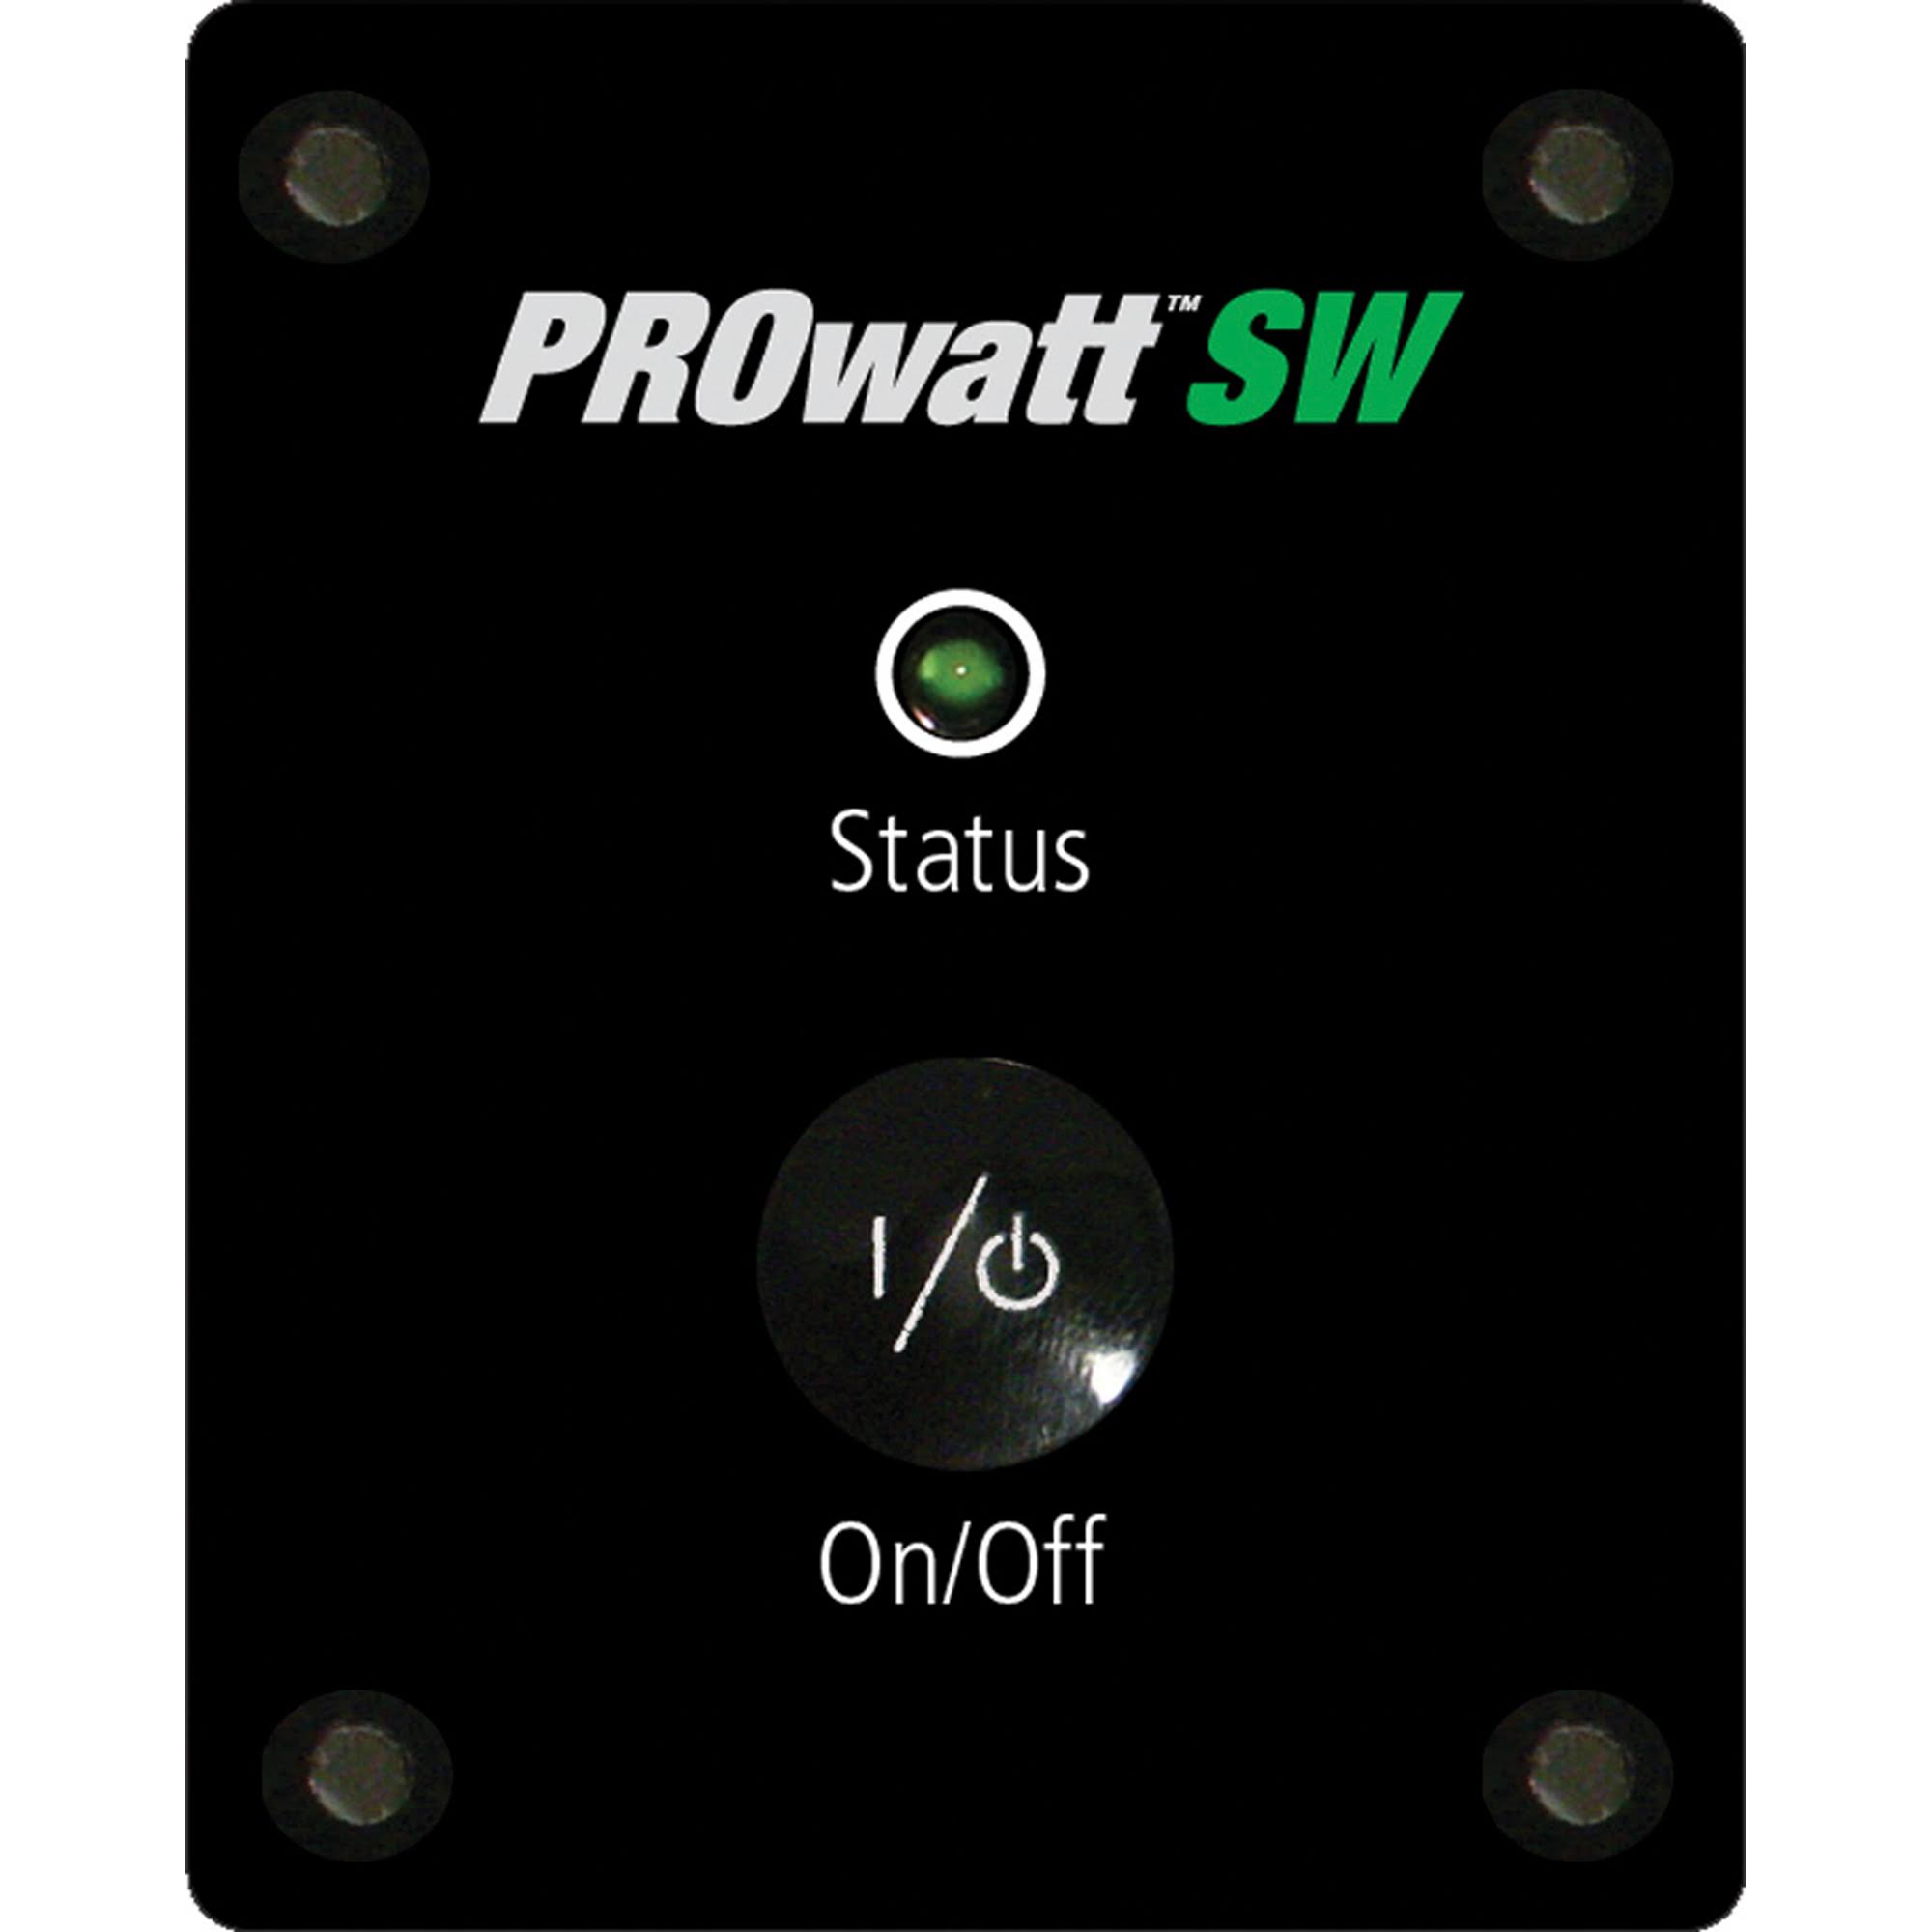 Xantrex PROwatt SW Remote Panel